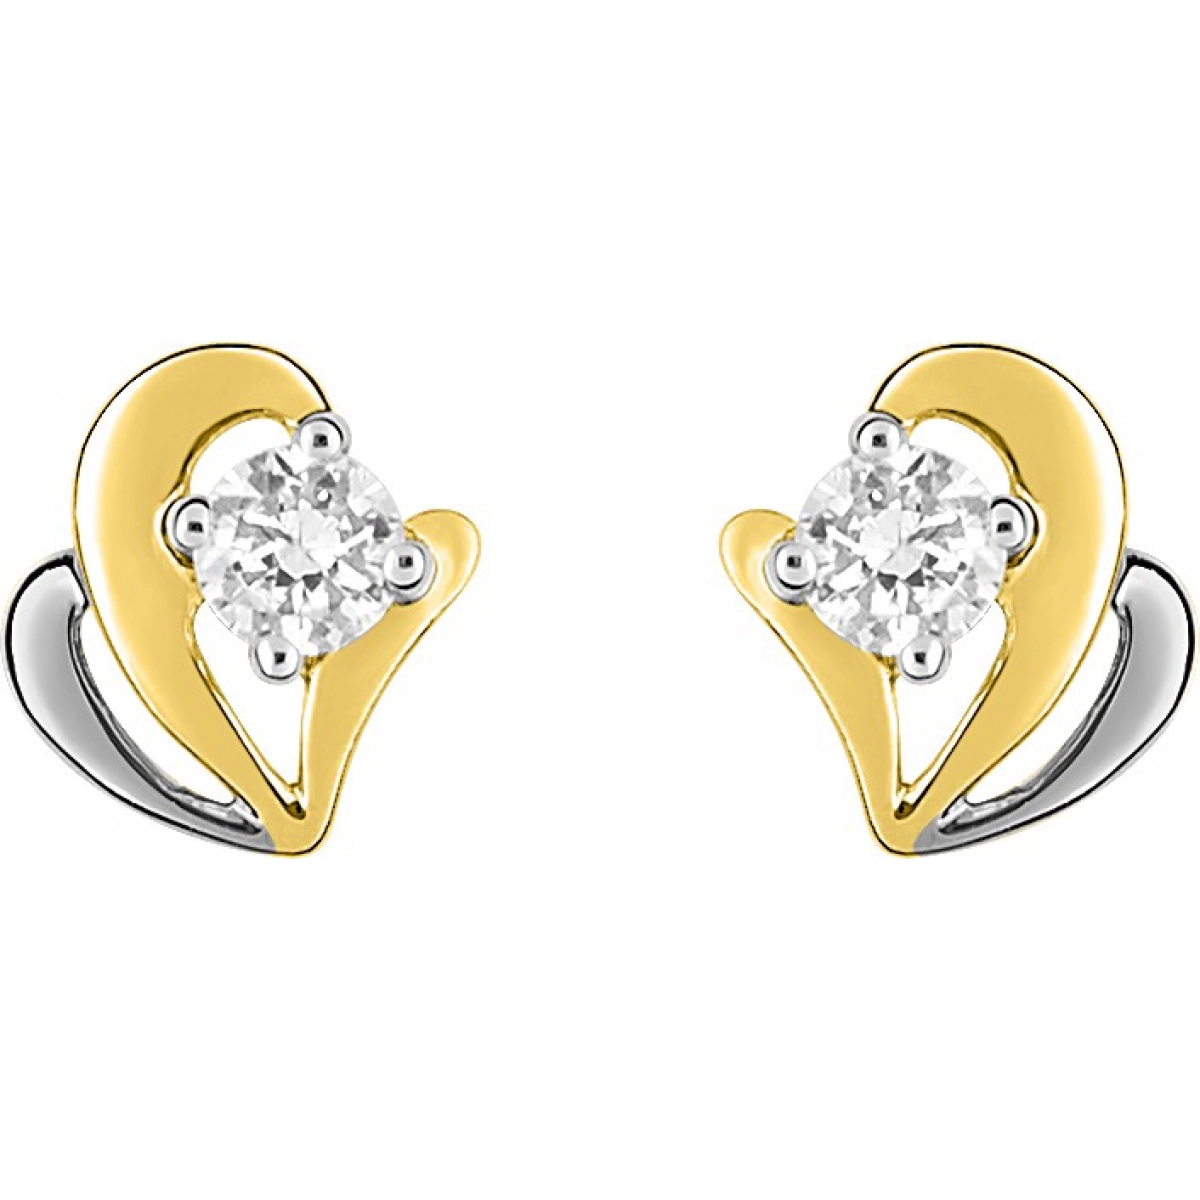 Earrings pair w. cz and rhod 18K YG  Lua Blanca  28SH96BZ.0